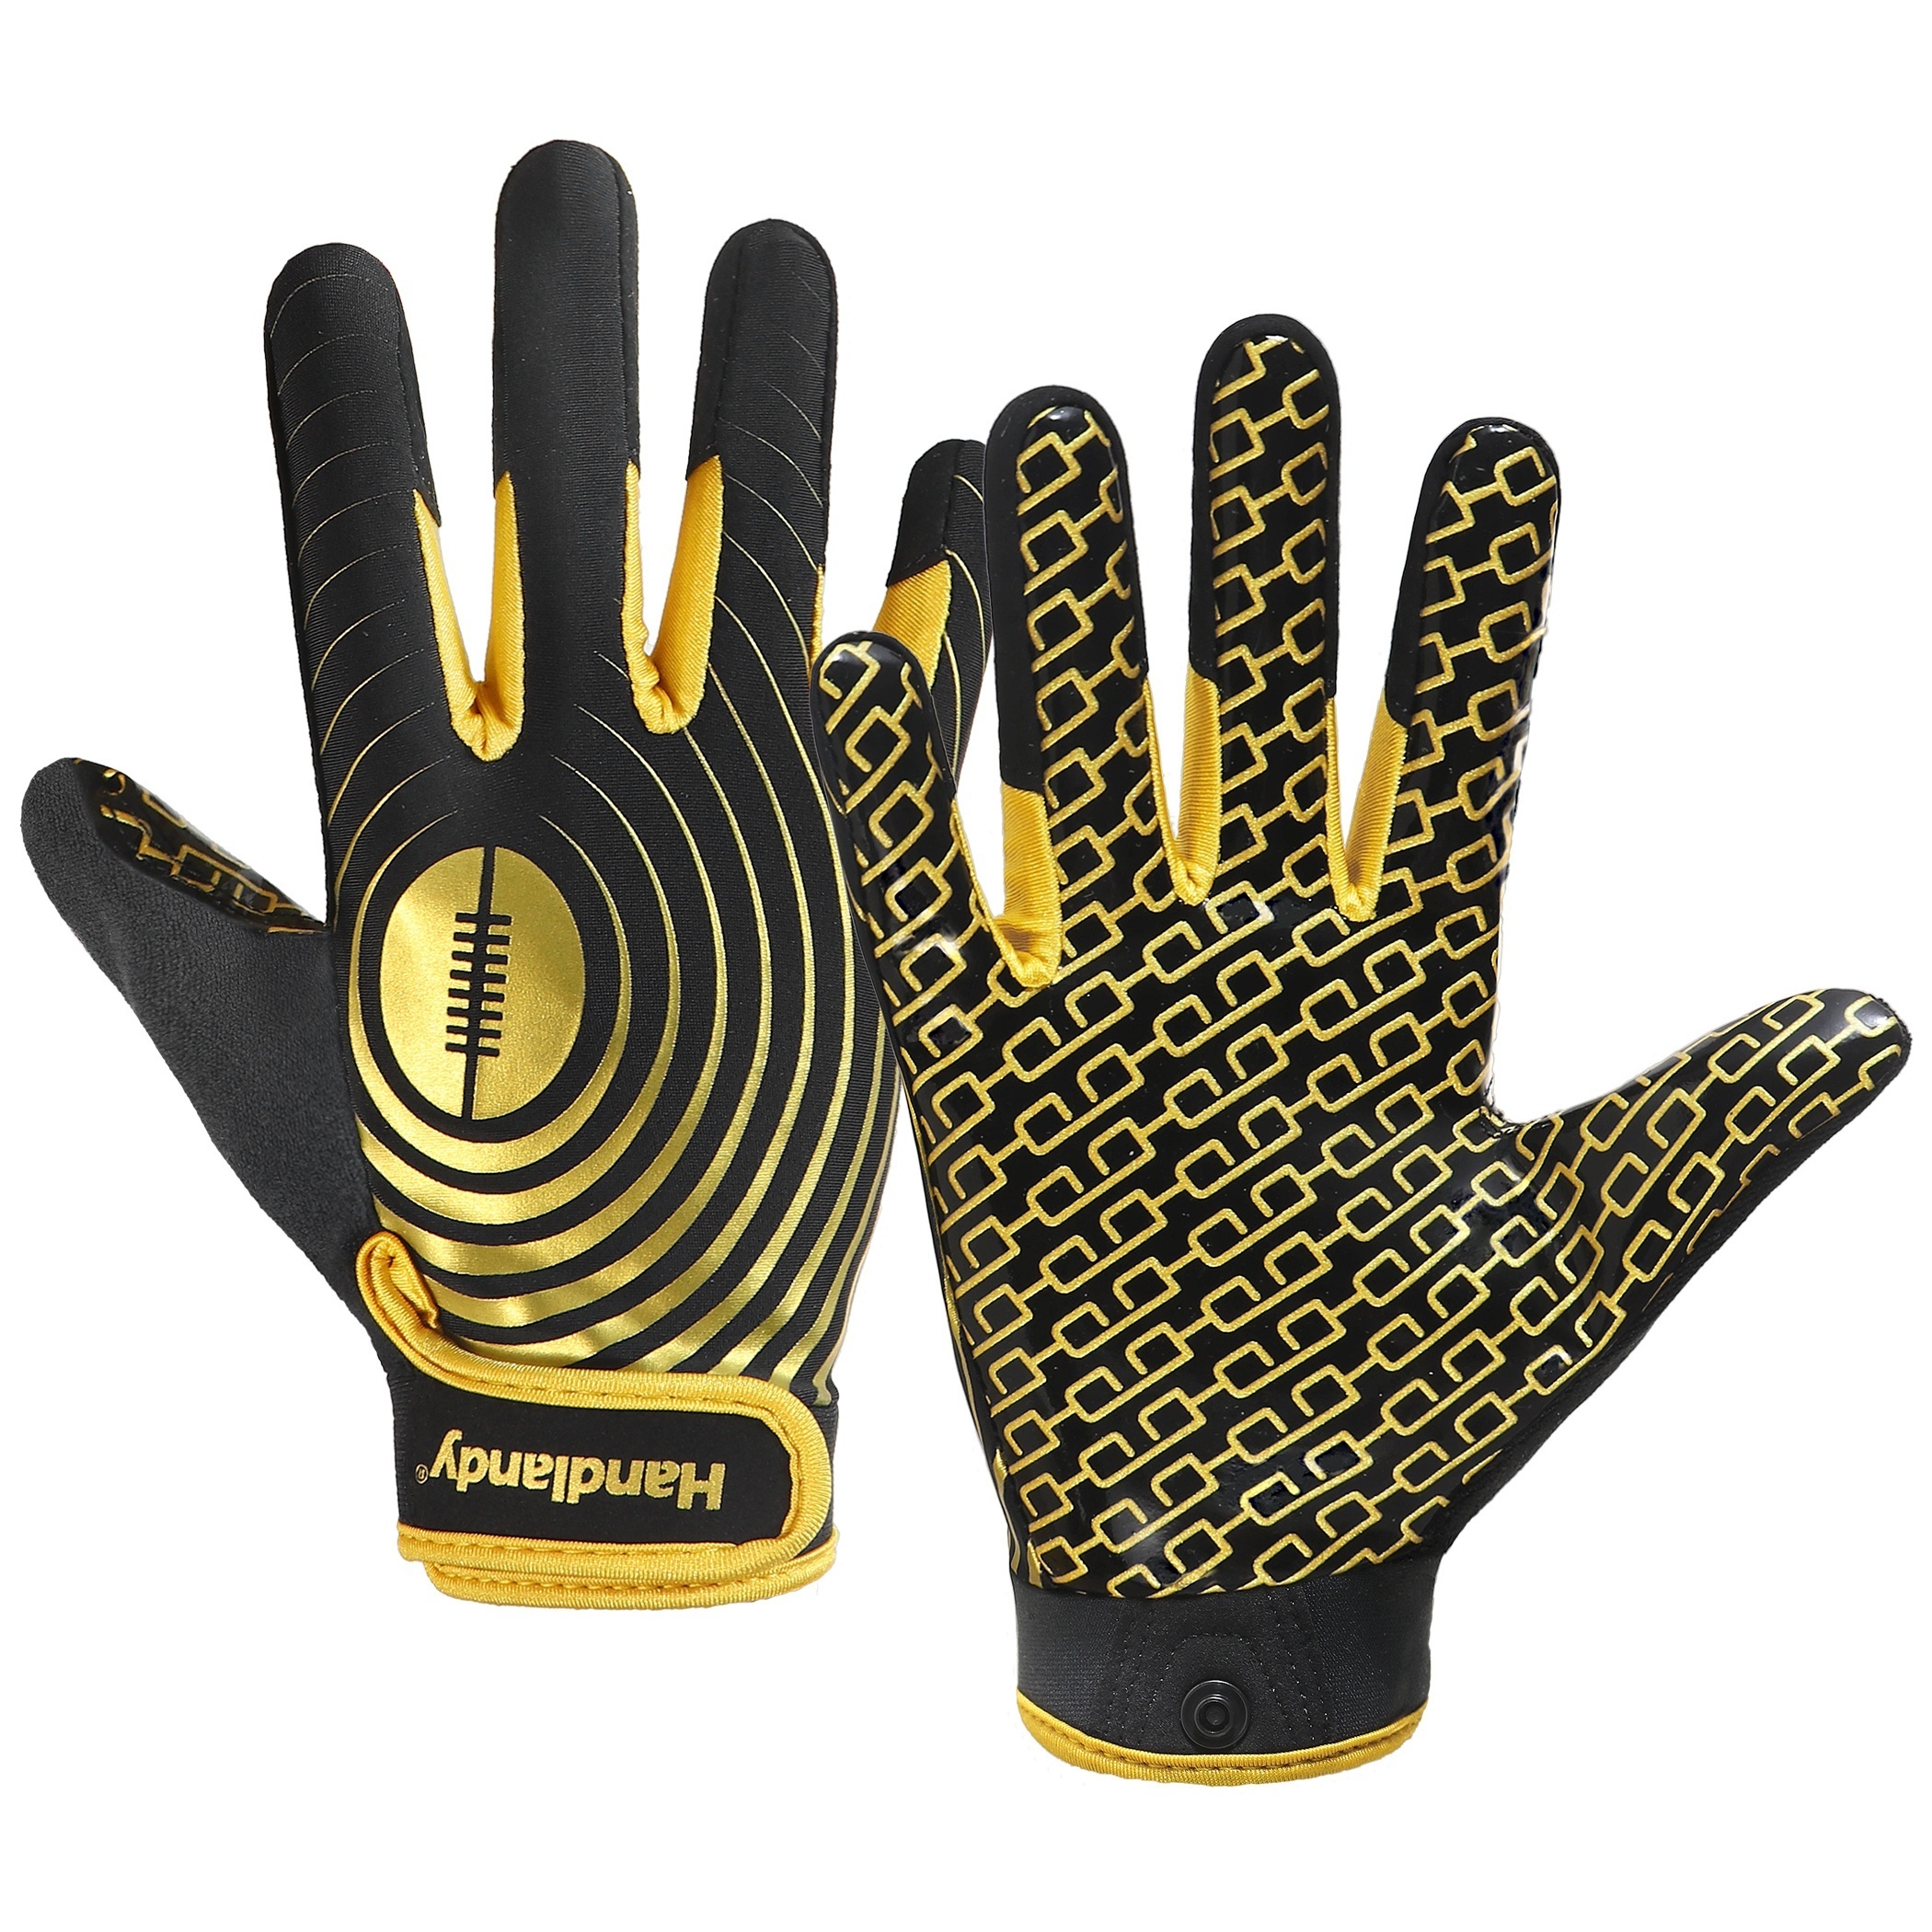 https://img.kwcdn.com/product/black-gold-colors-elastic-gloves/d69d2f15w98k18-38822e5e/Fancyalgo/VirtualModelMatting/a4efce4bc044c0ac0f2ff2bac8ec8c8d.jpg